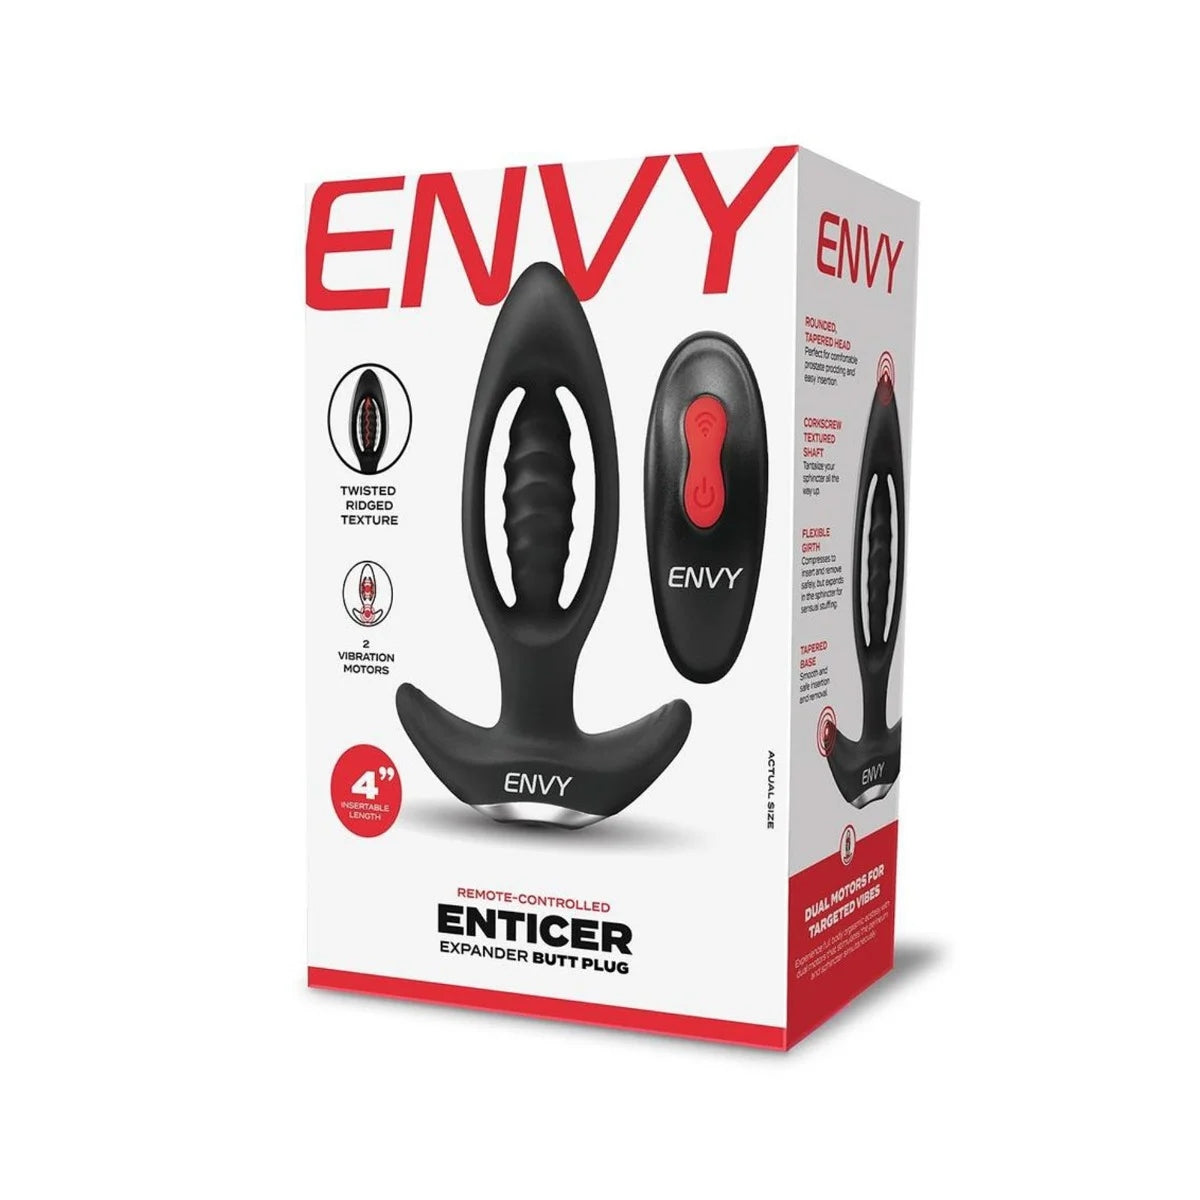 Envy Enticer Expander Vibrating Butt Plug With Remote Control Black